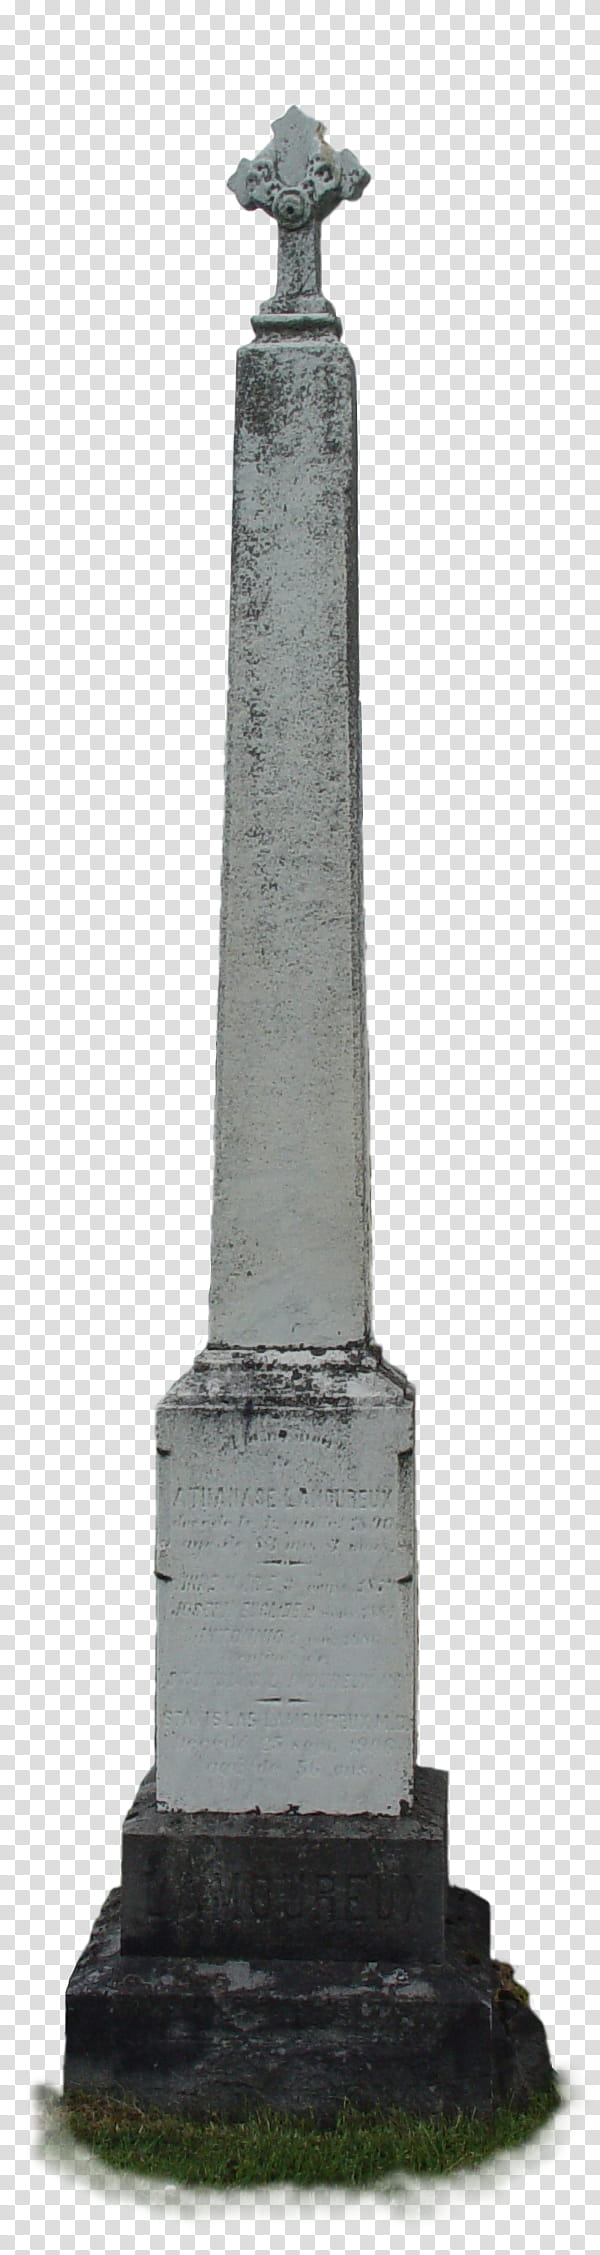 Tombstones, gray concrete monument transparent background PNG clipart